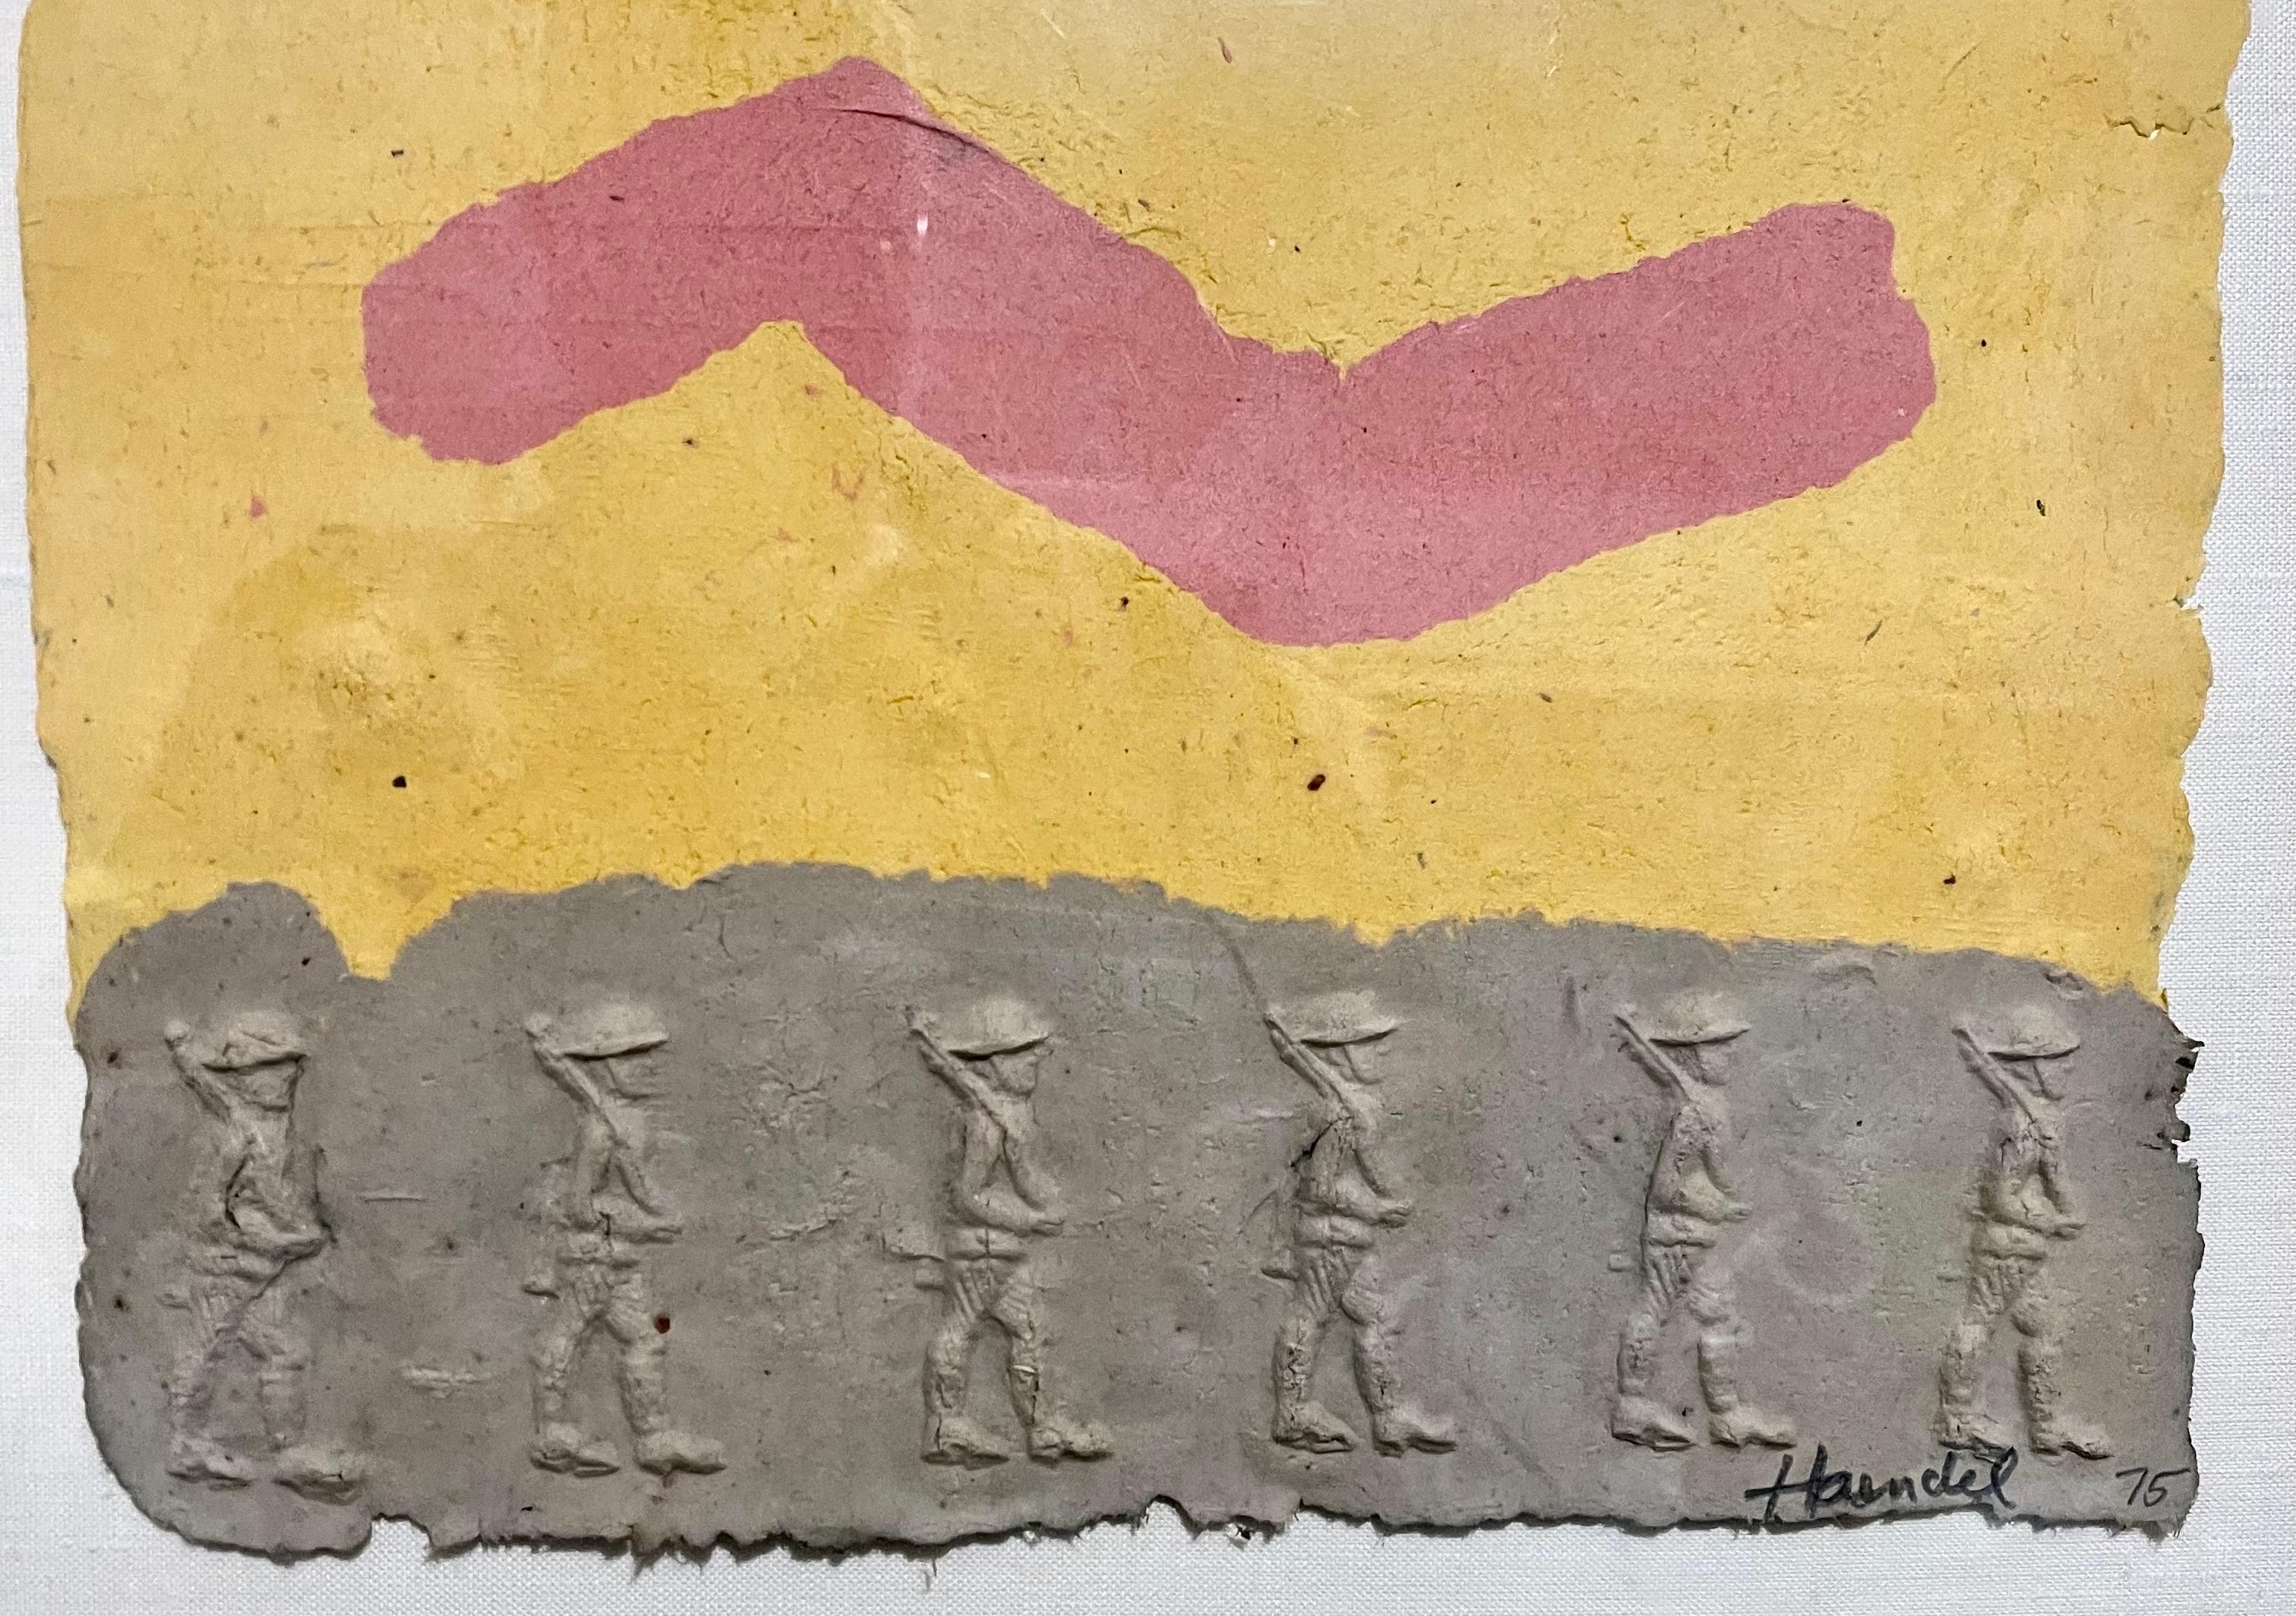 Bill Haendel Americana Toy Soldiers Cast Paper Relief Modern Pop Art Sculpture For Sale 5